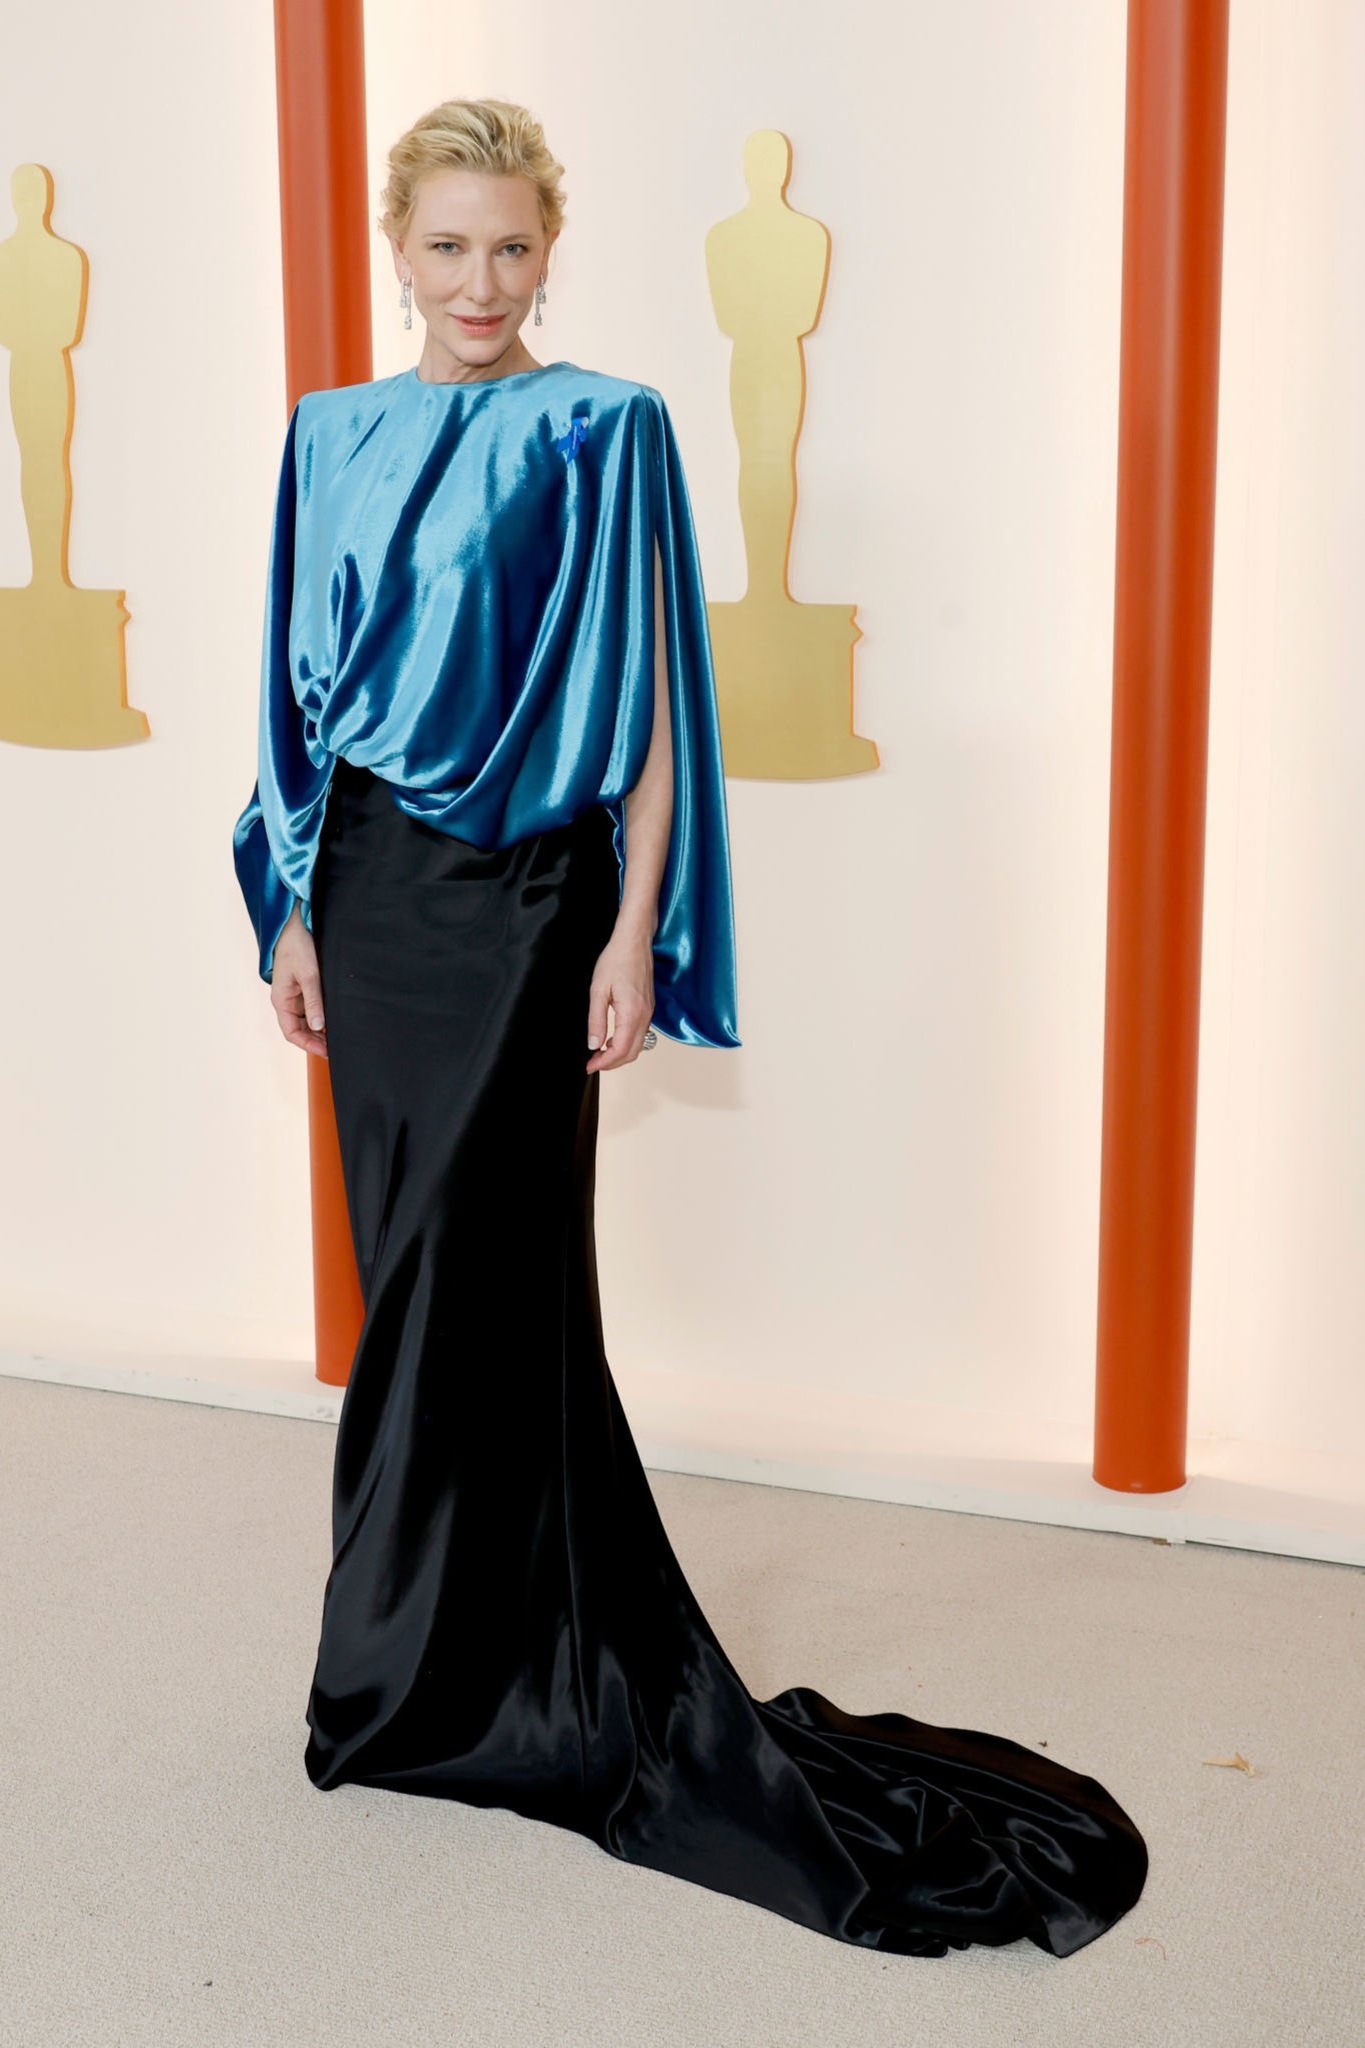 Cate Blanchett Academy Awards March 12, 2023